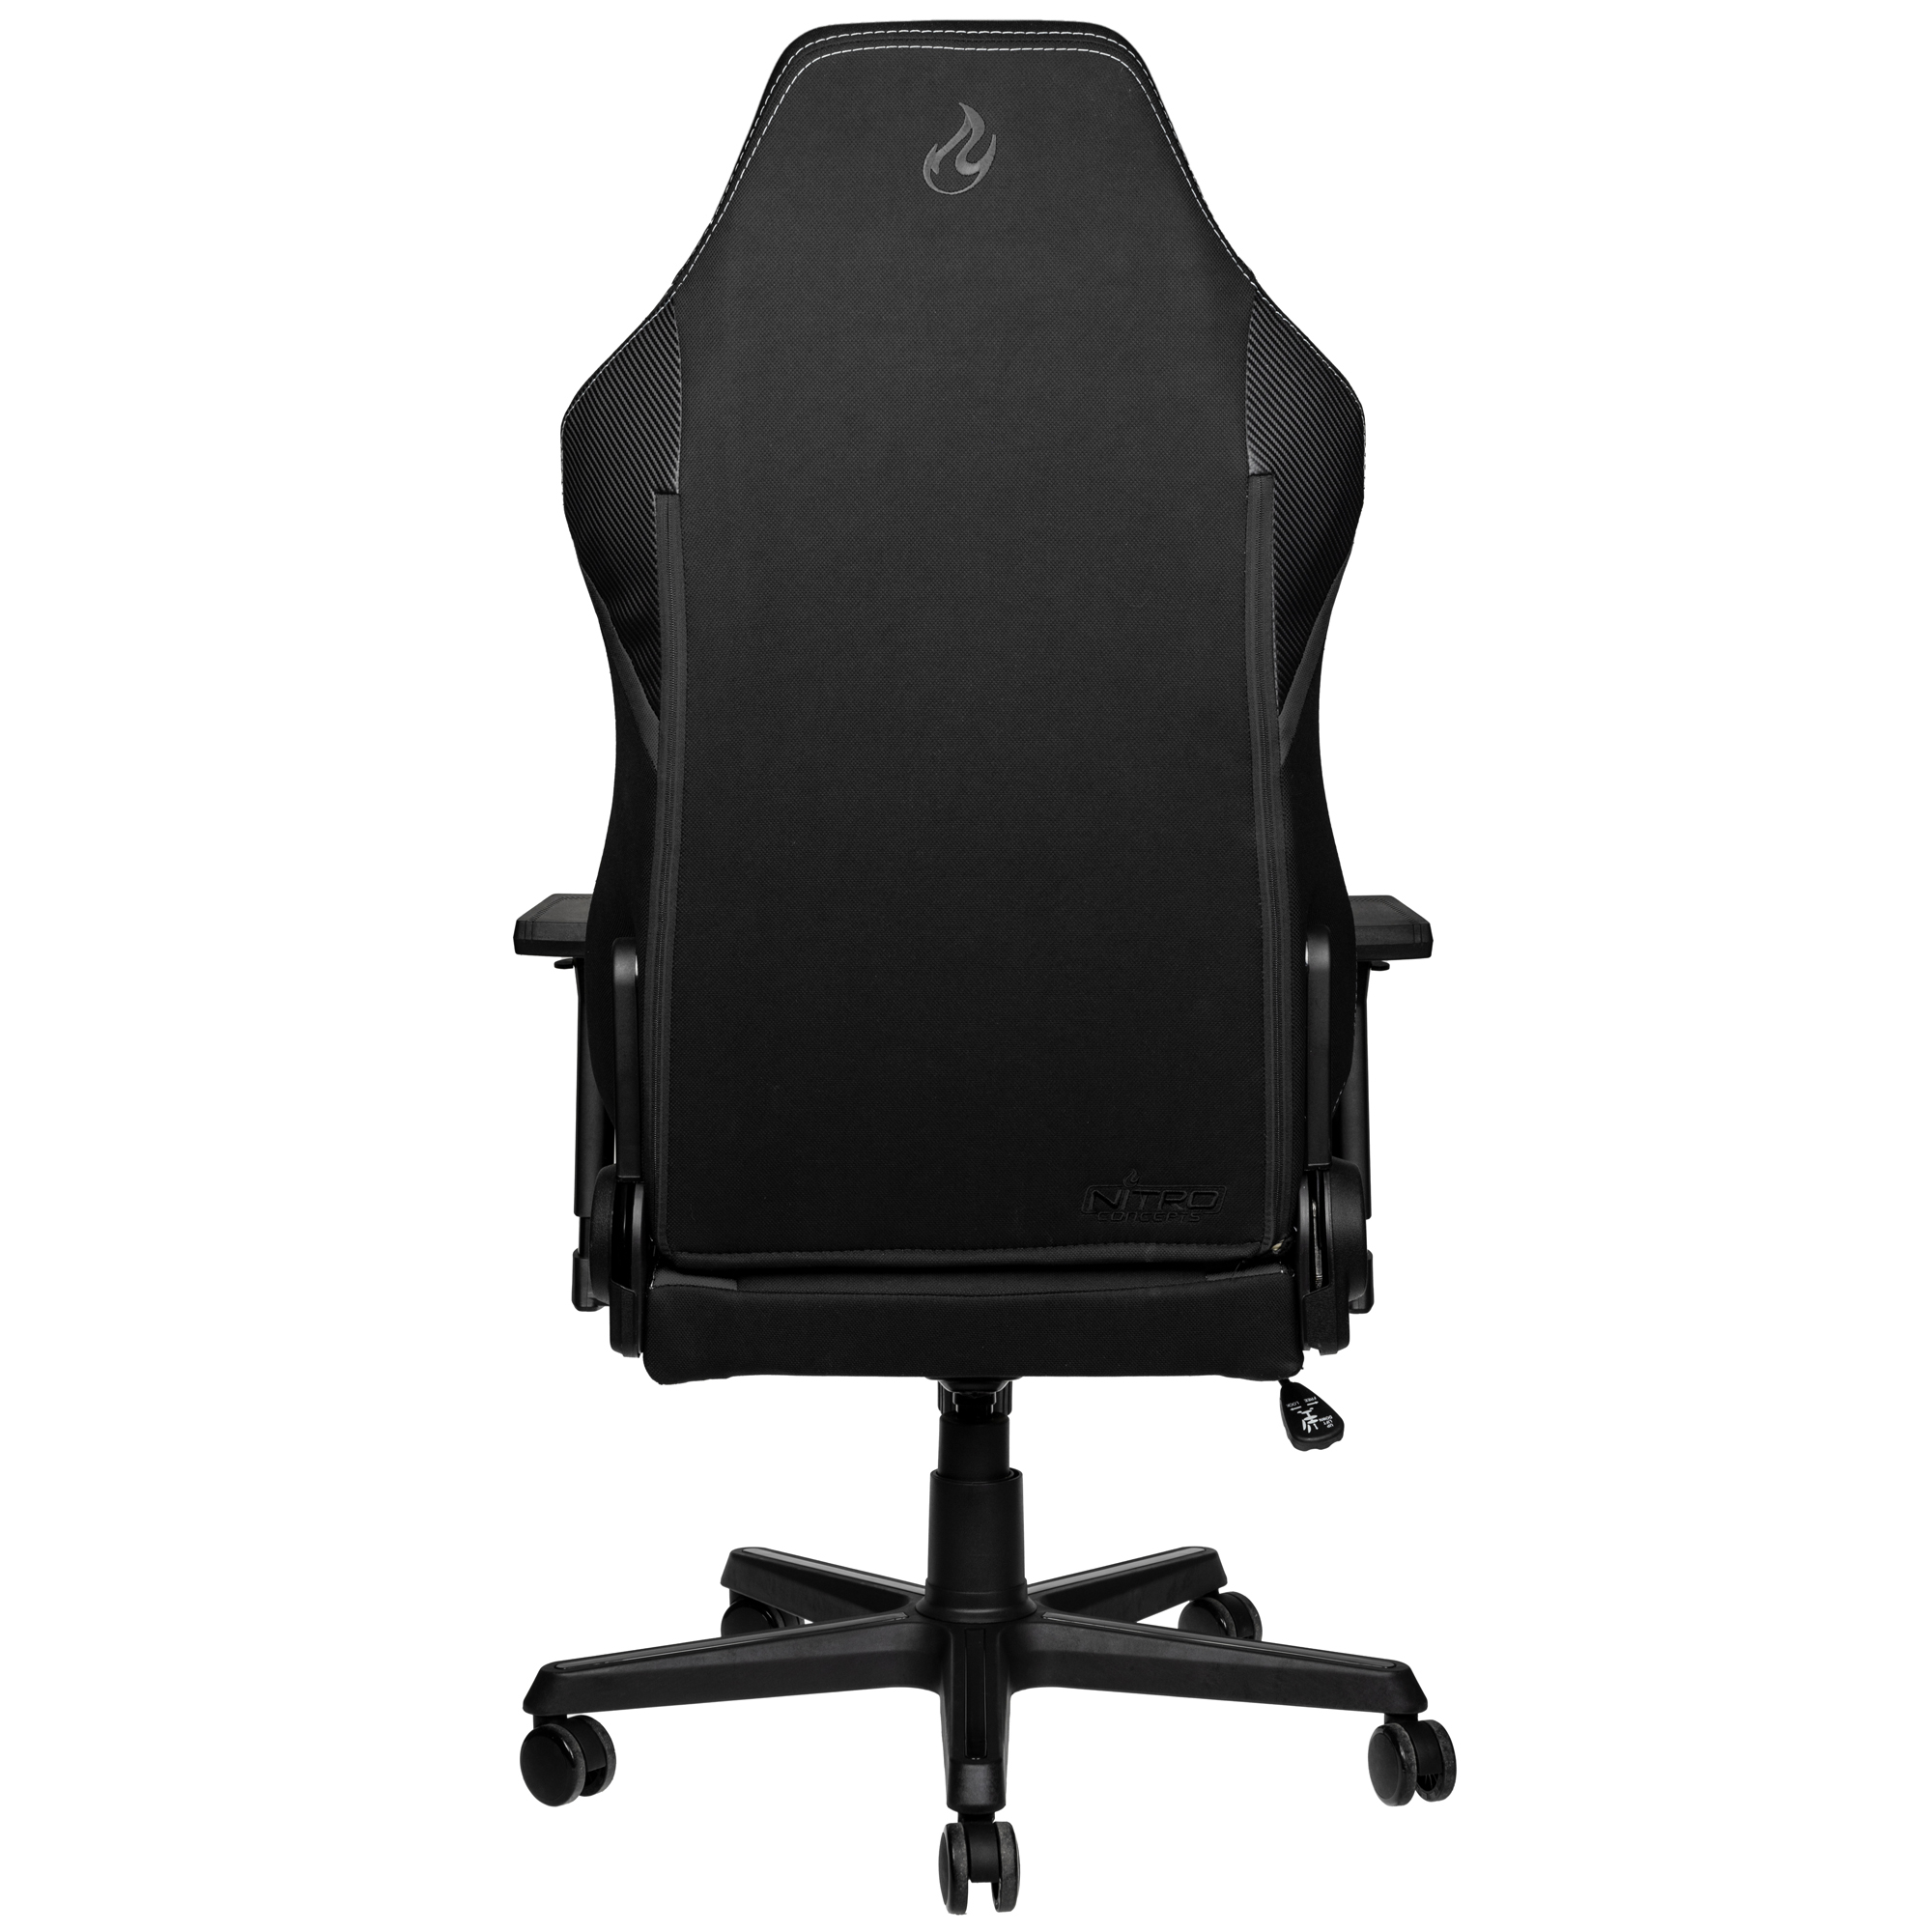 Nitro Concepts - X1000 Gaming Chair Black